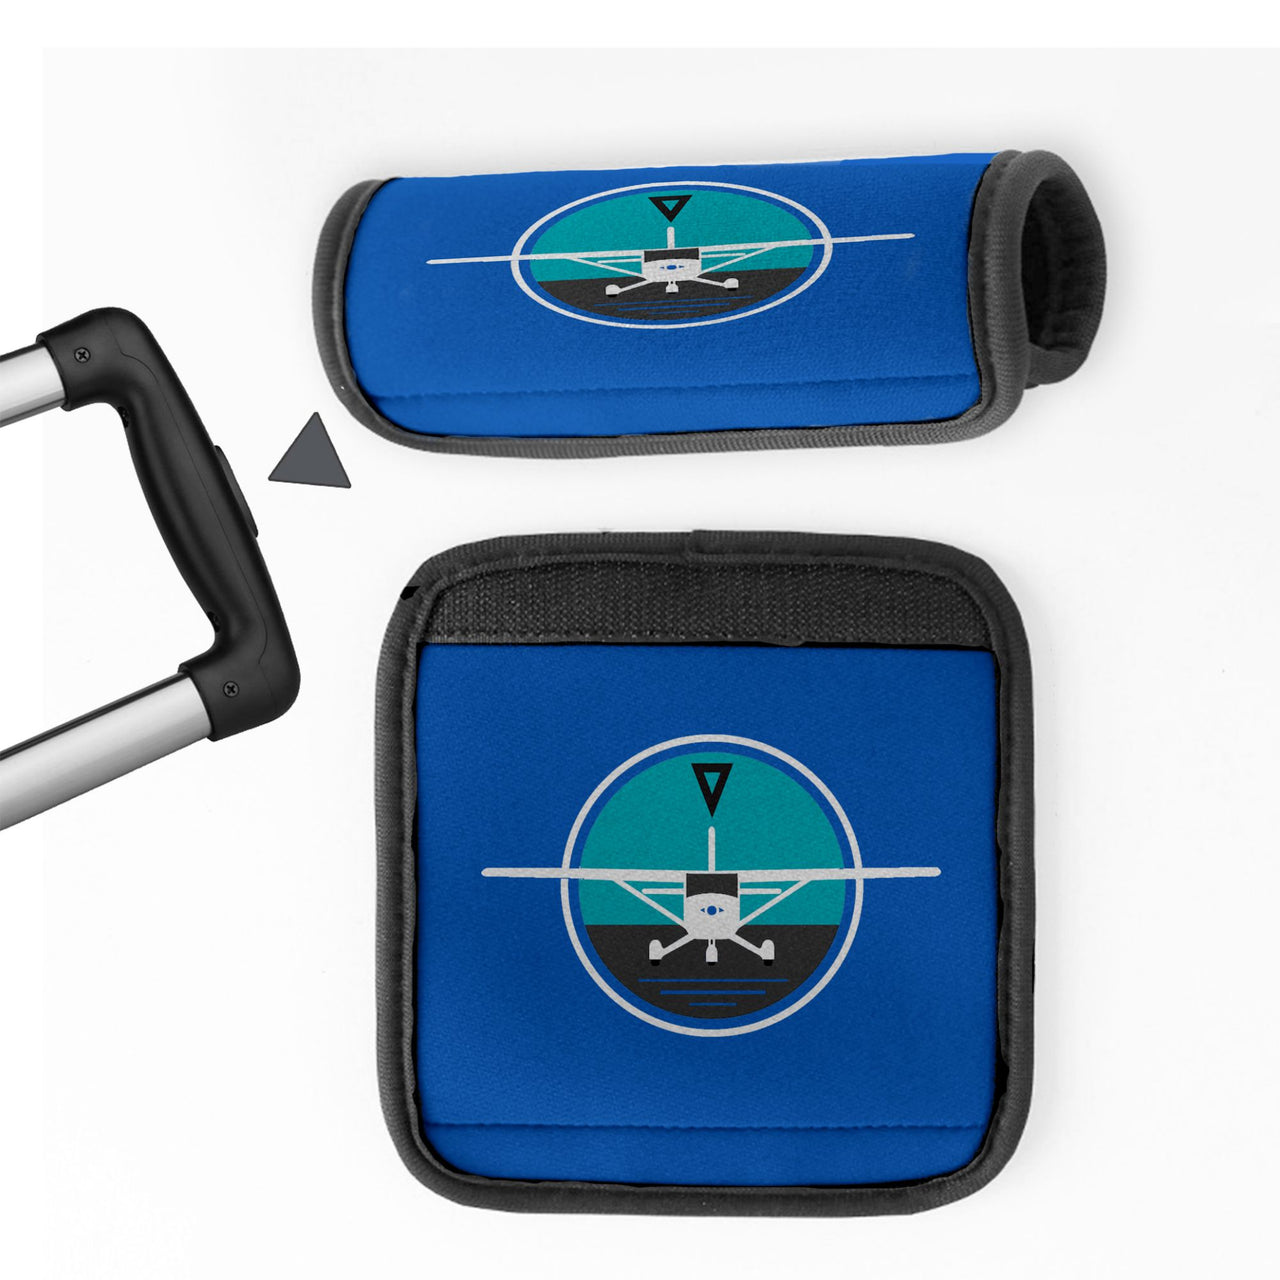 Cessna & Gyro Designed Neoprene Luggage Handle Covers